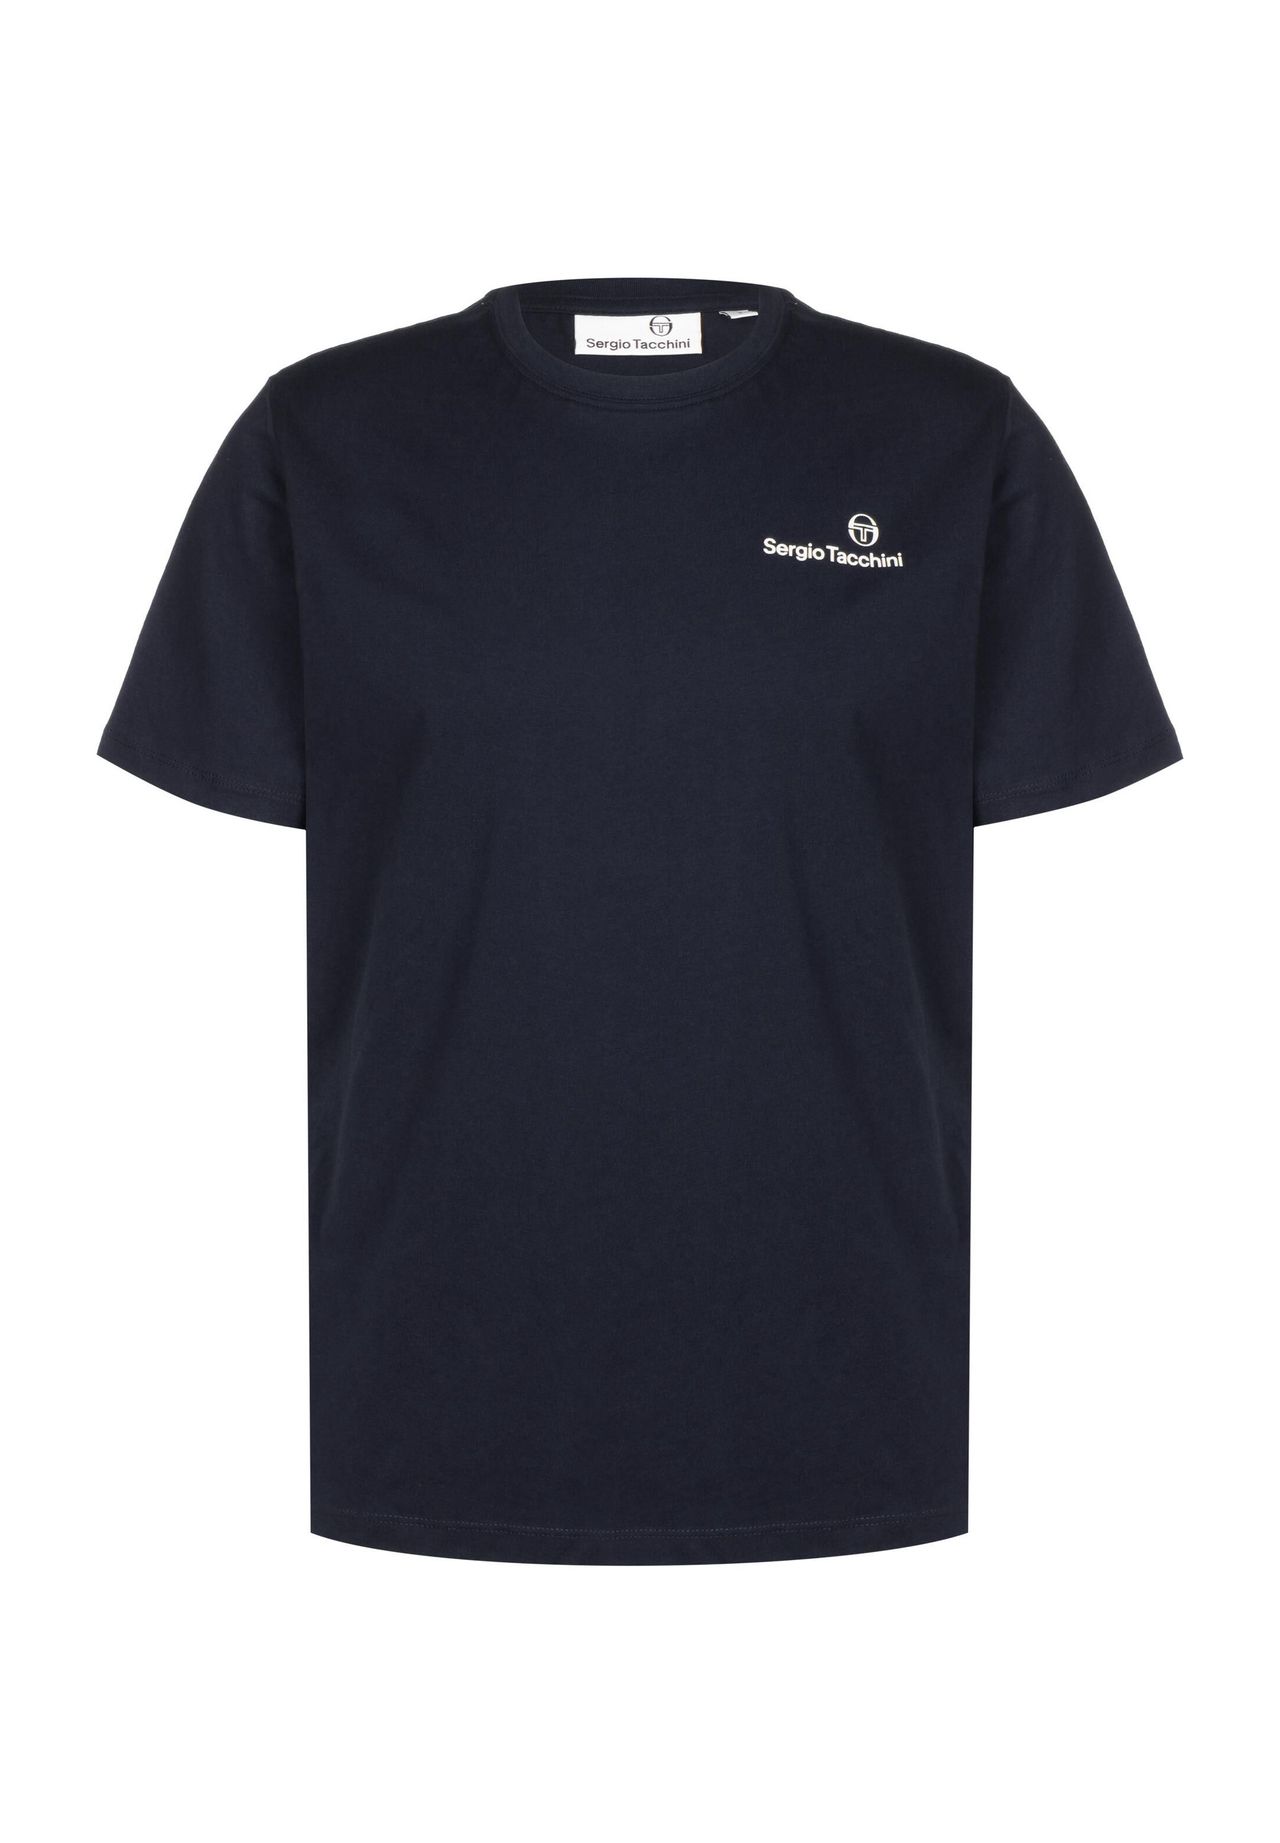 Herren Bekleidung Sergio Tacchini T-Shirt Arnold 021